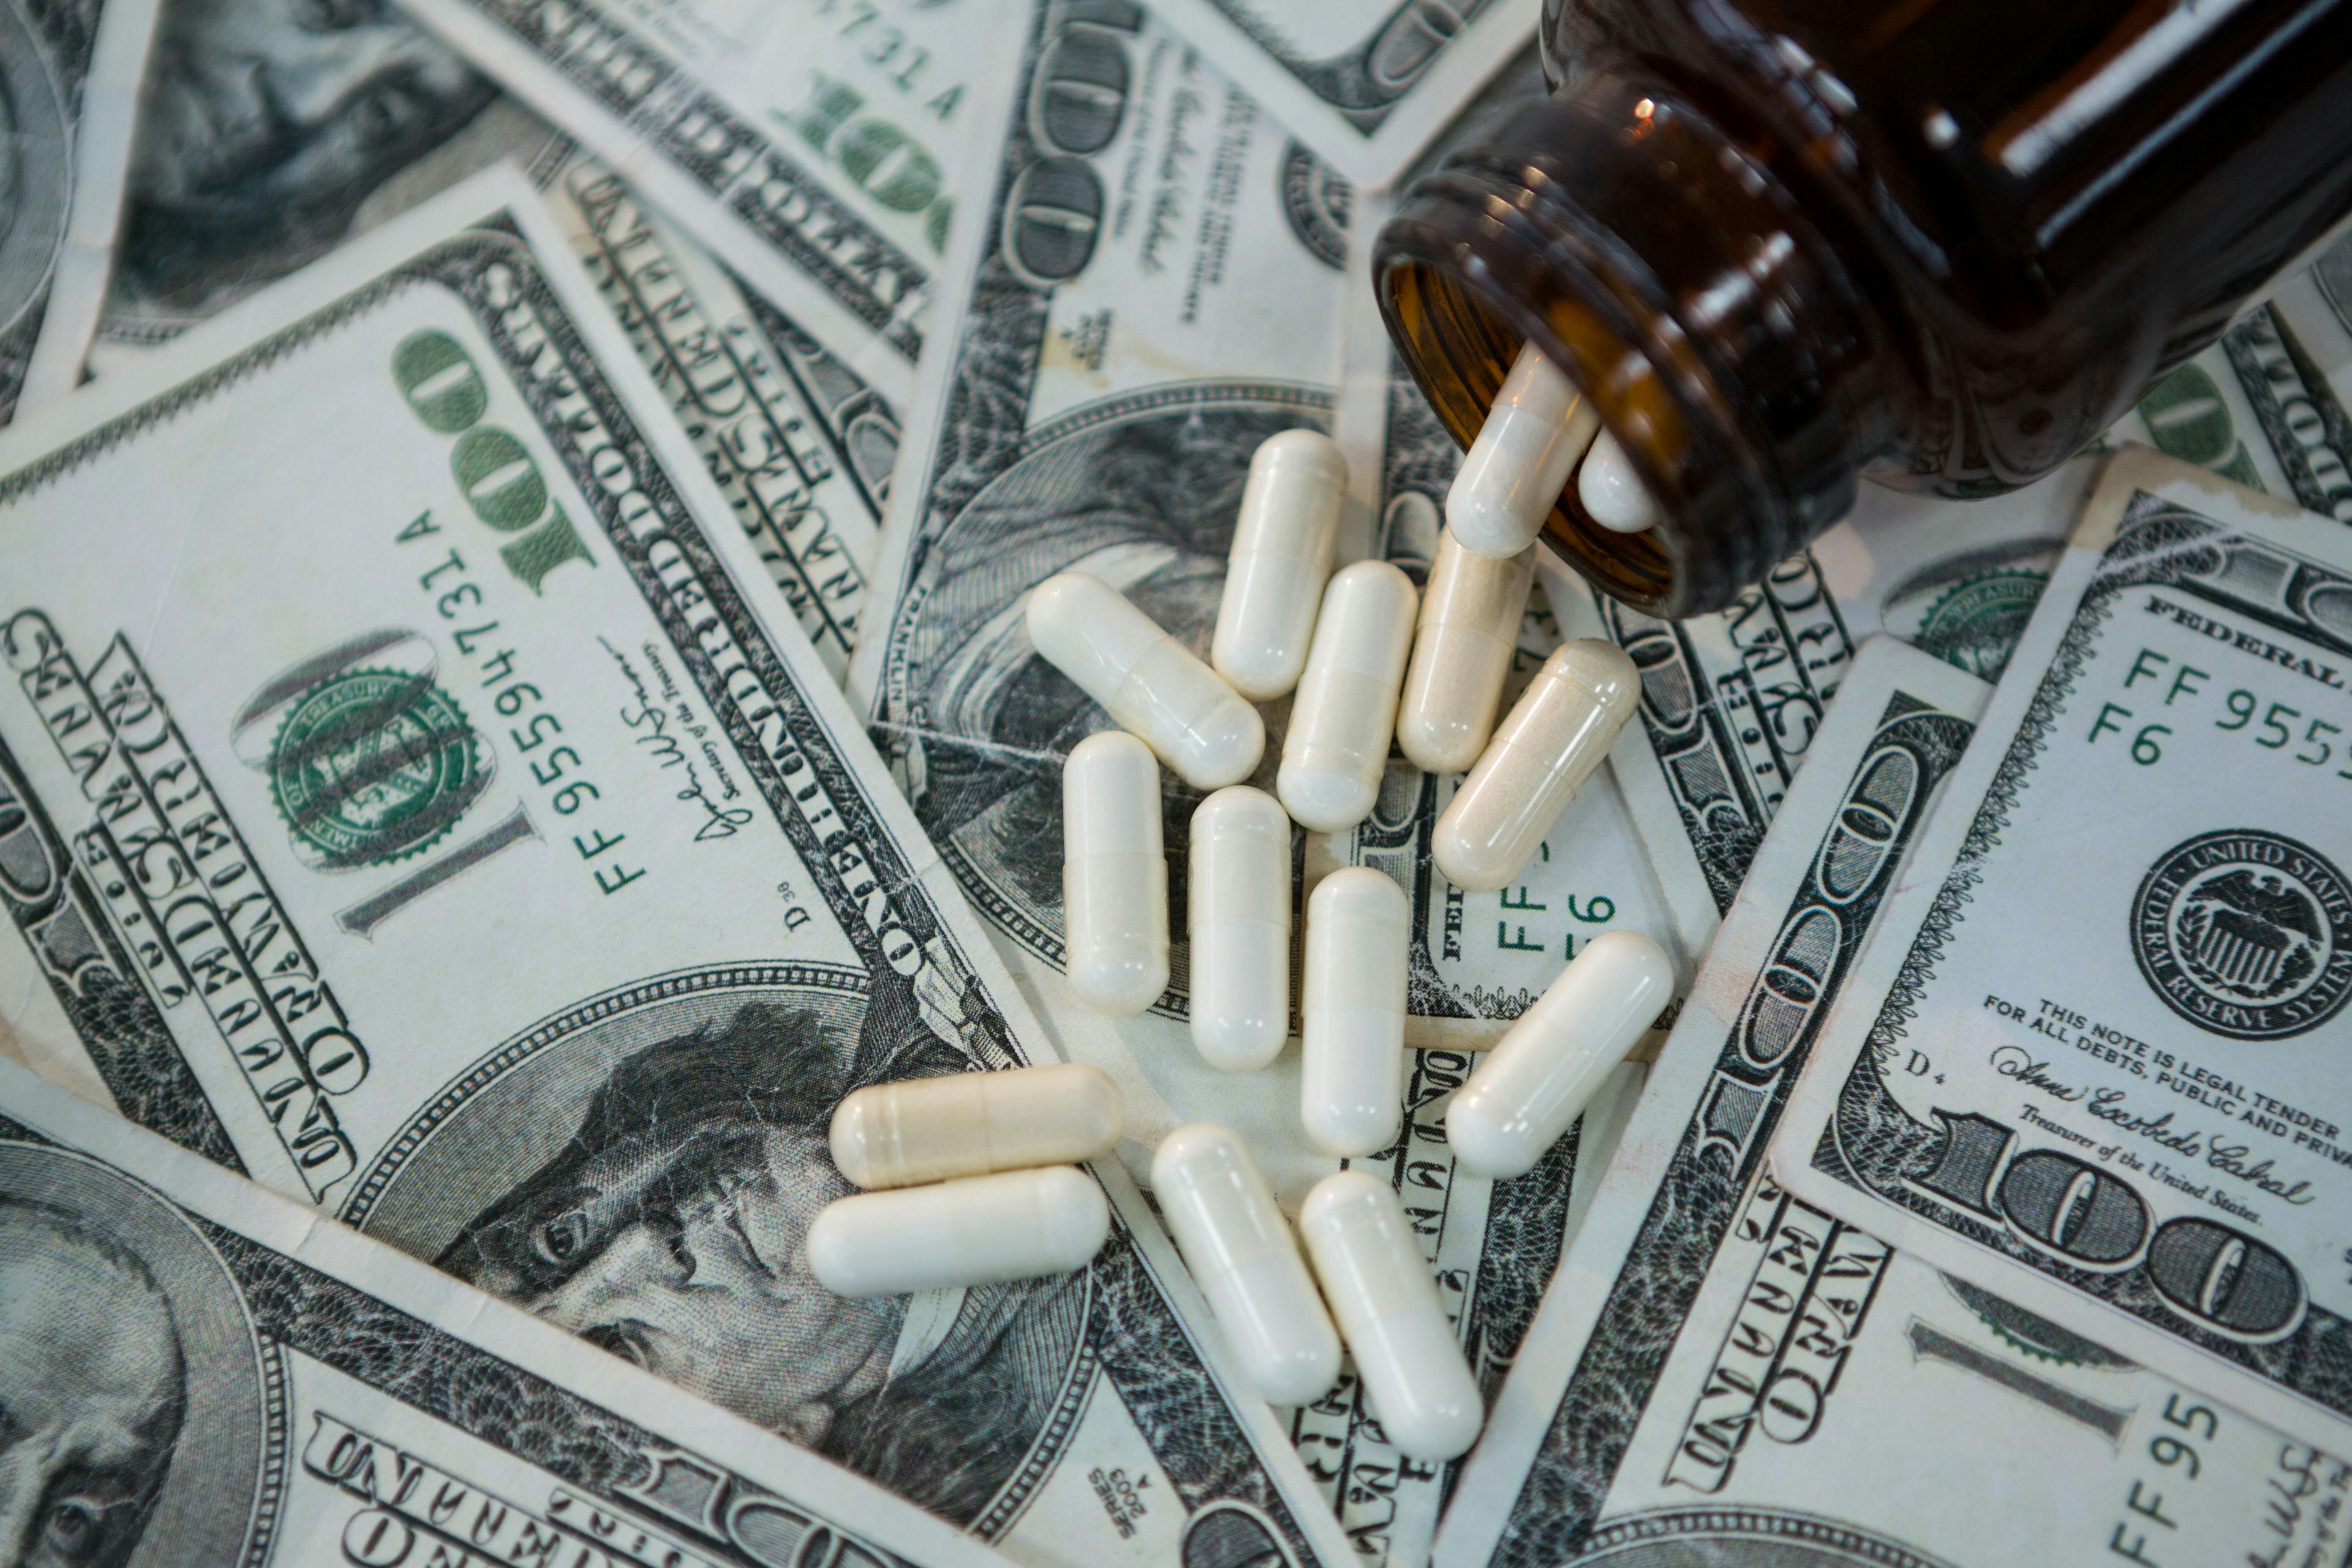 Global Generic Drug Market Forecast to Hit $531.8 Billion by 2028